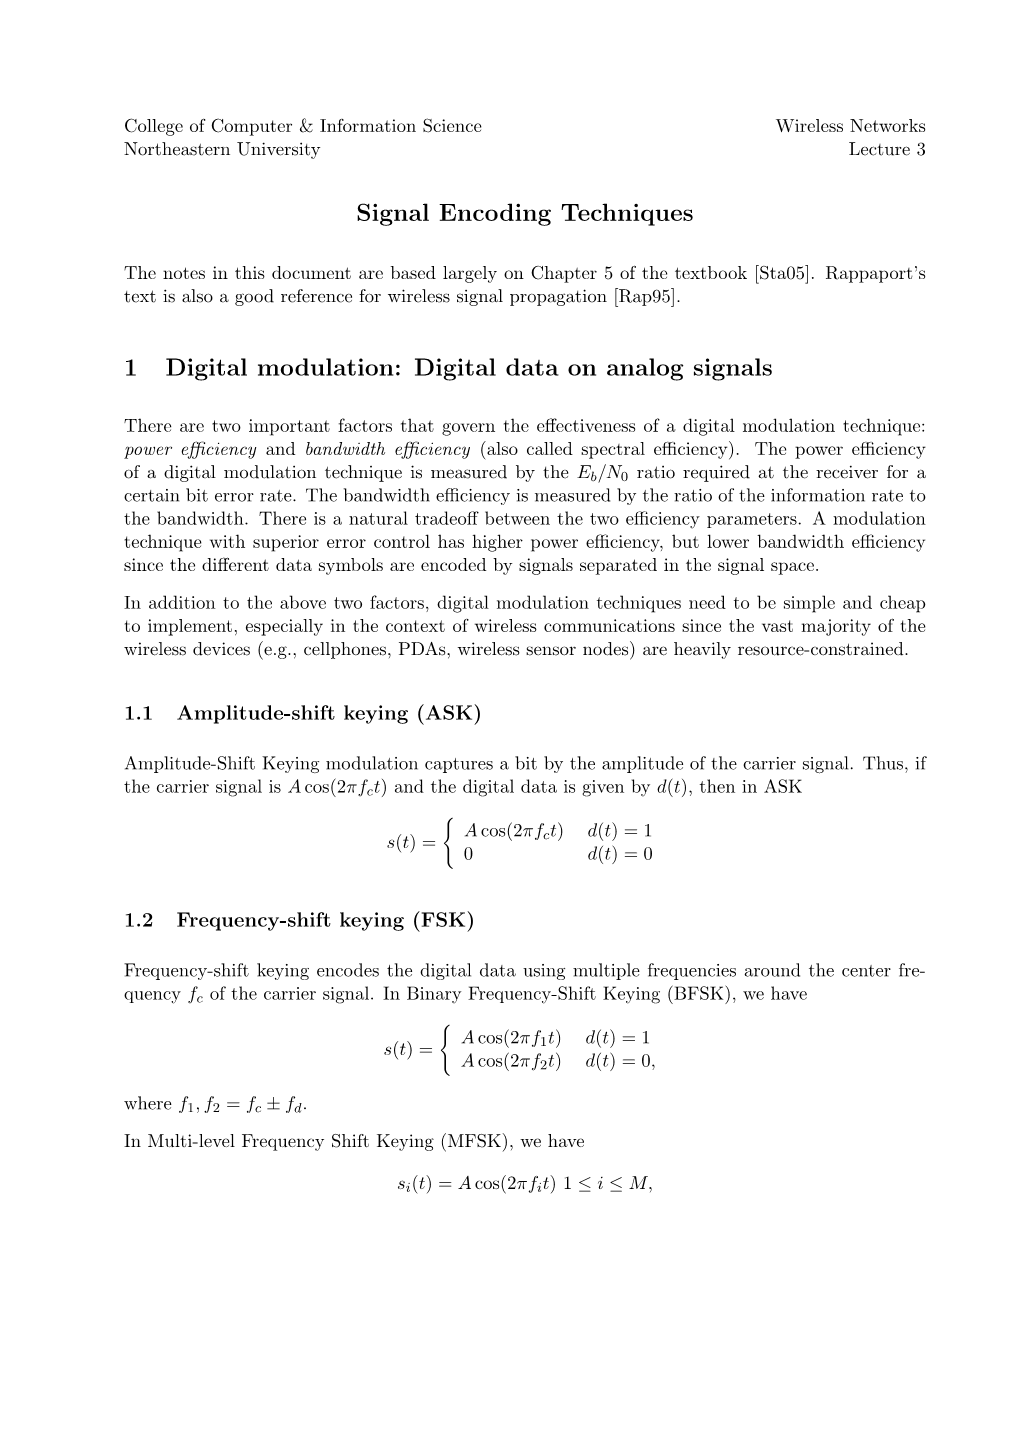 Signal Encoding Techniques 1 Digital Modulation: Digital Data on Analog